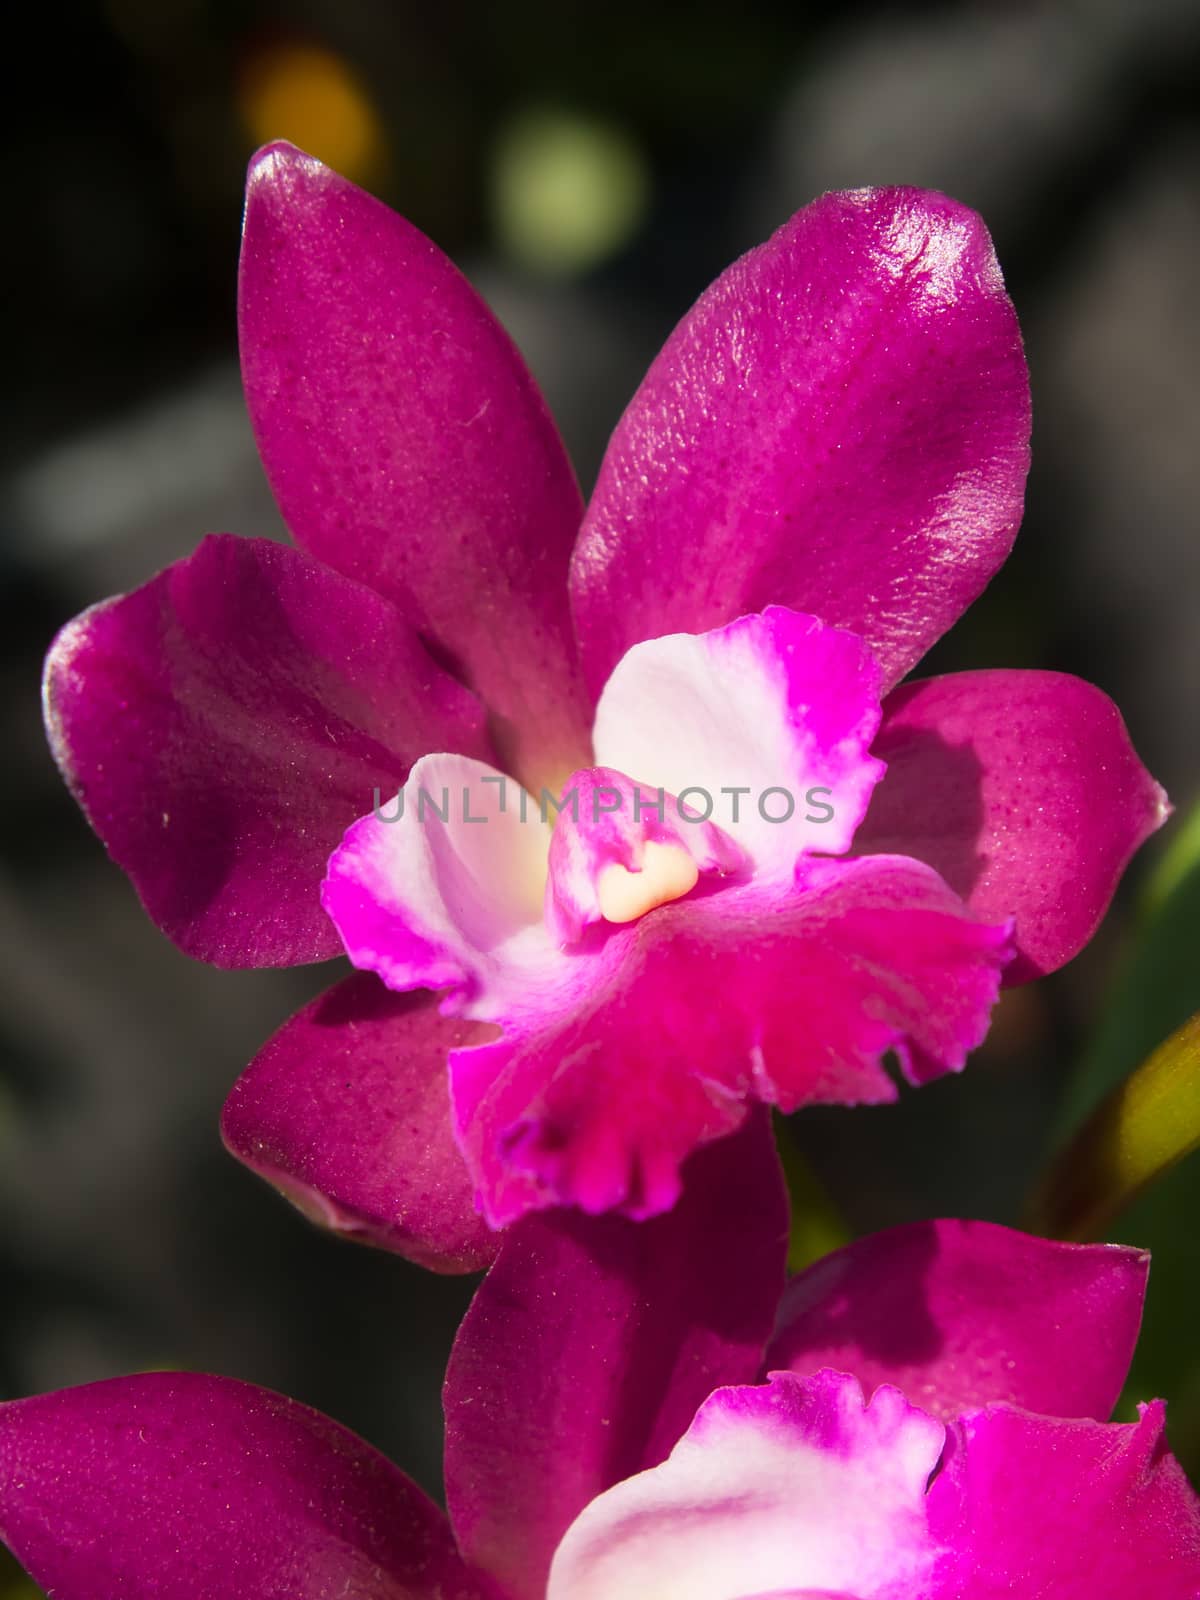 Thwaitesara Phinyophan Boy flower, beautiful hybrid cattleya relatives.